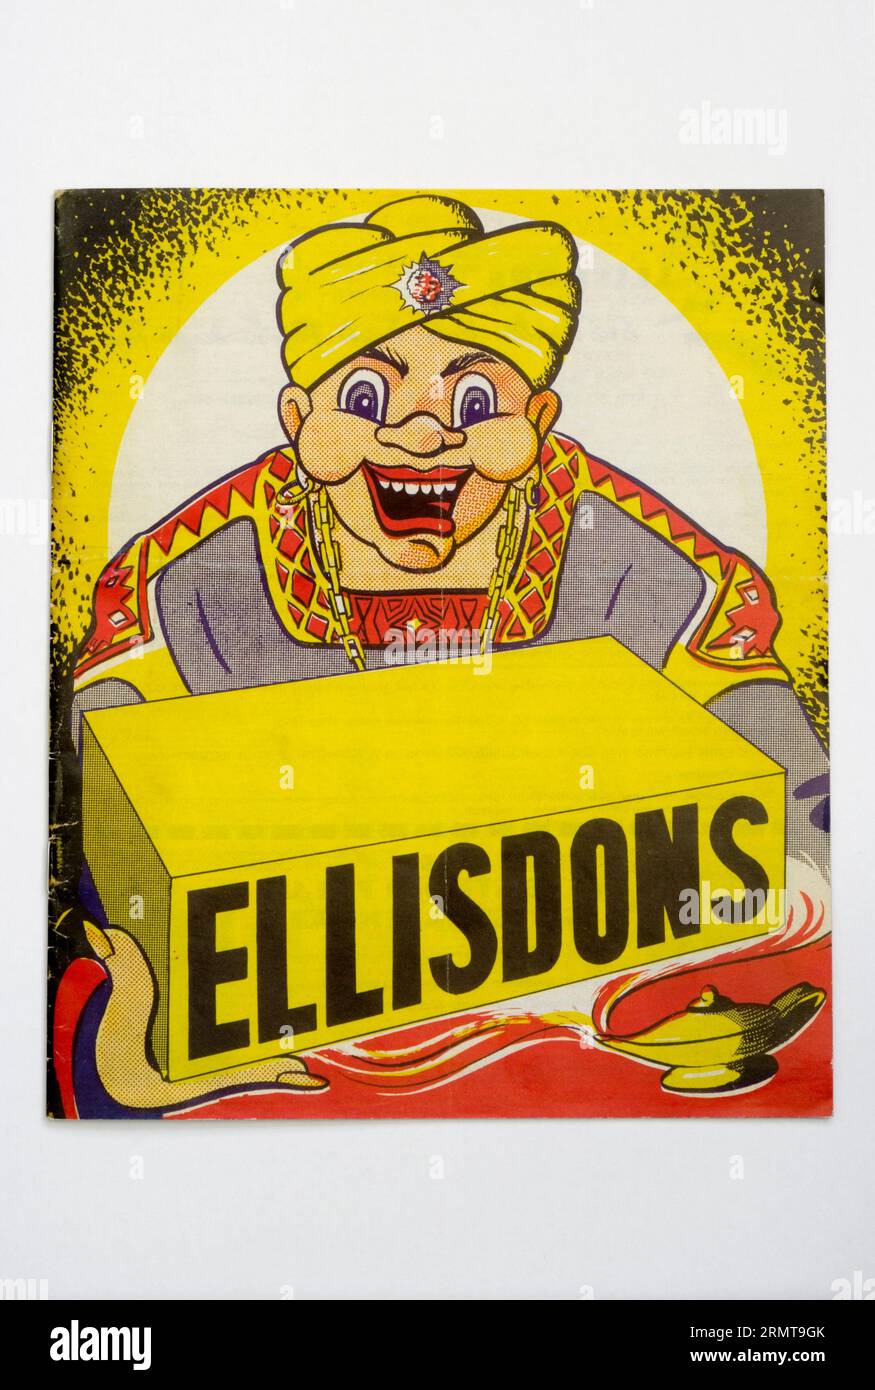 Ellisdons Catalogue 1969 Stock Photo